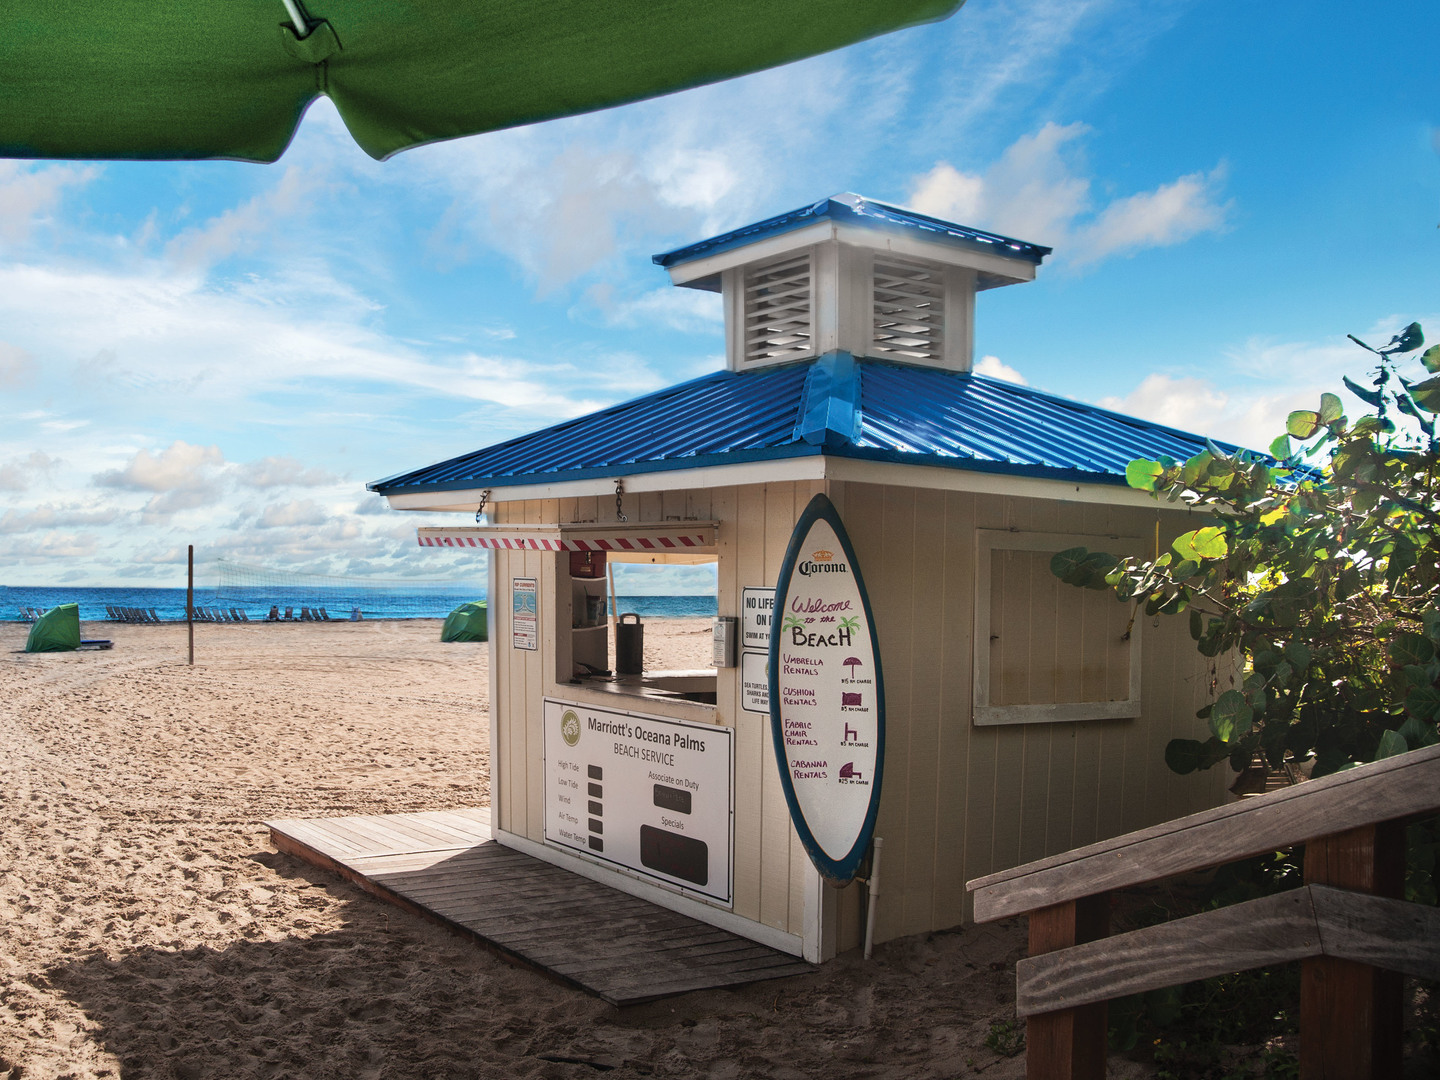 Marriott's Oceana Palms Beach Rentals. Marriott's Oceana Palms is located in Riviera Beach, Florida United States.